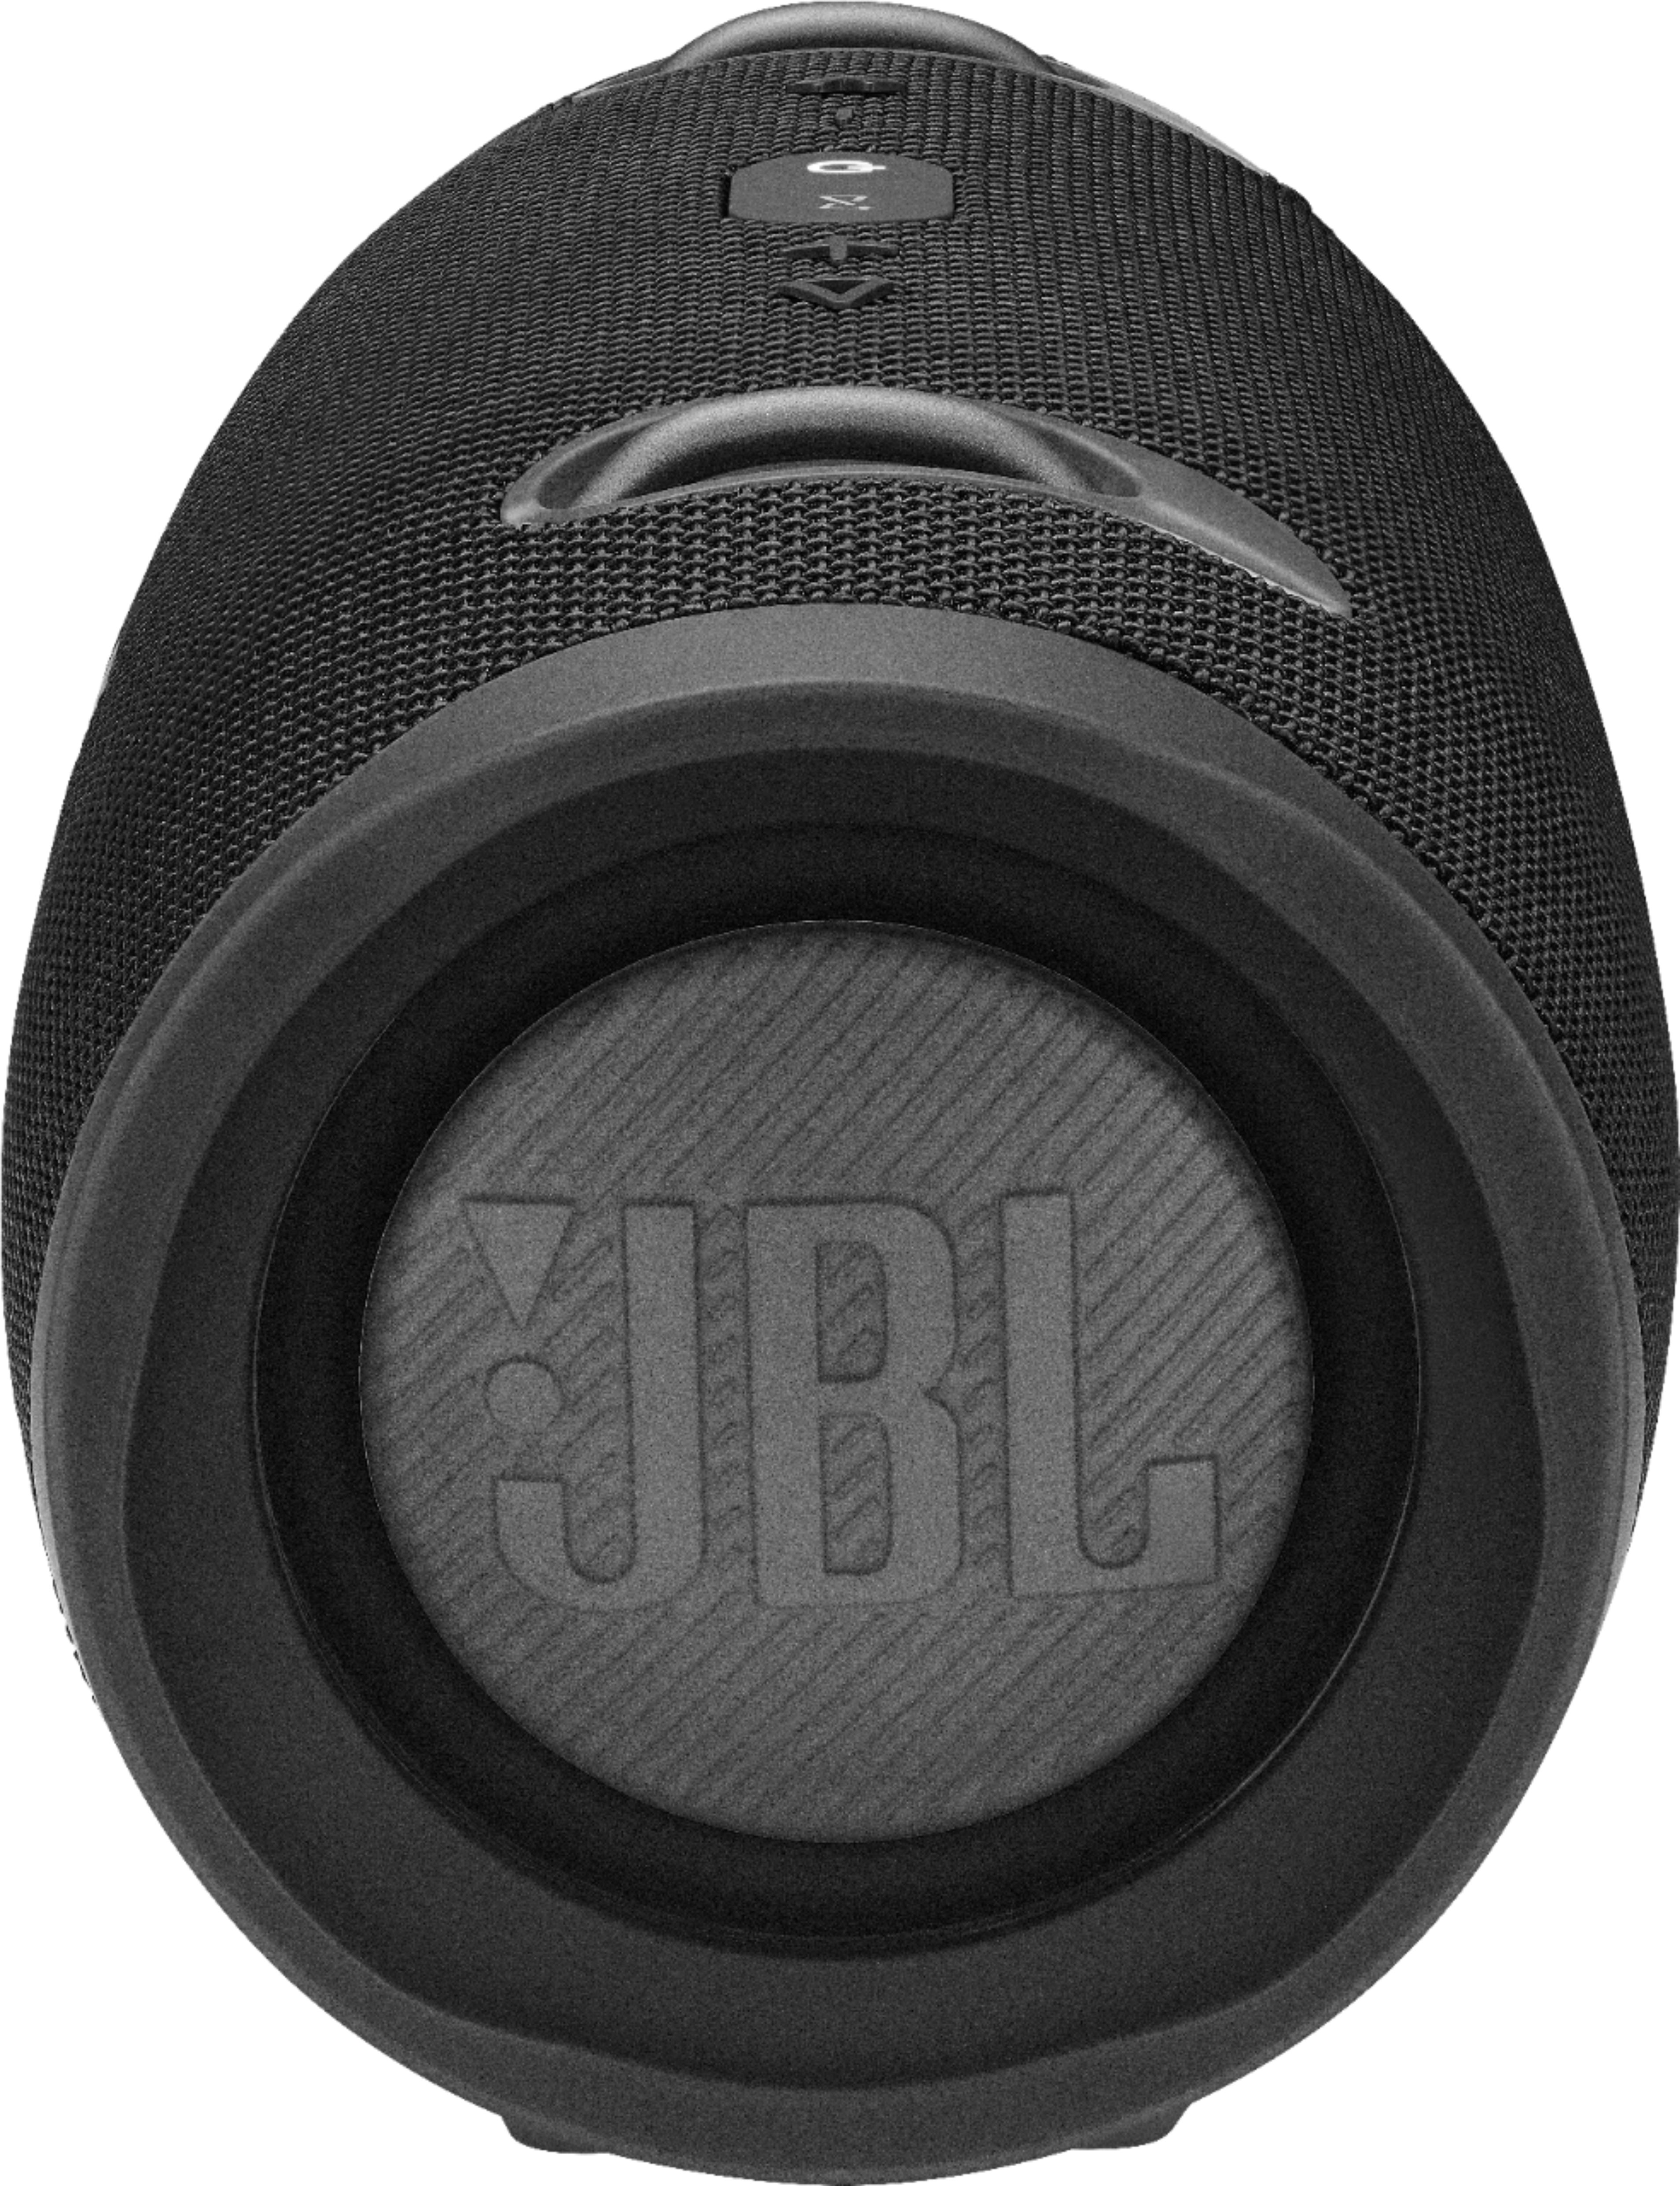 best bluetooth speaker jbl xtreme